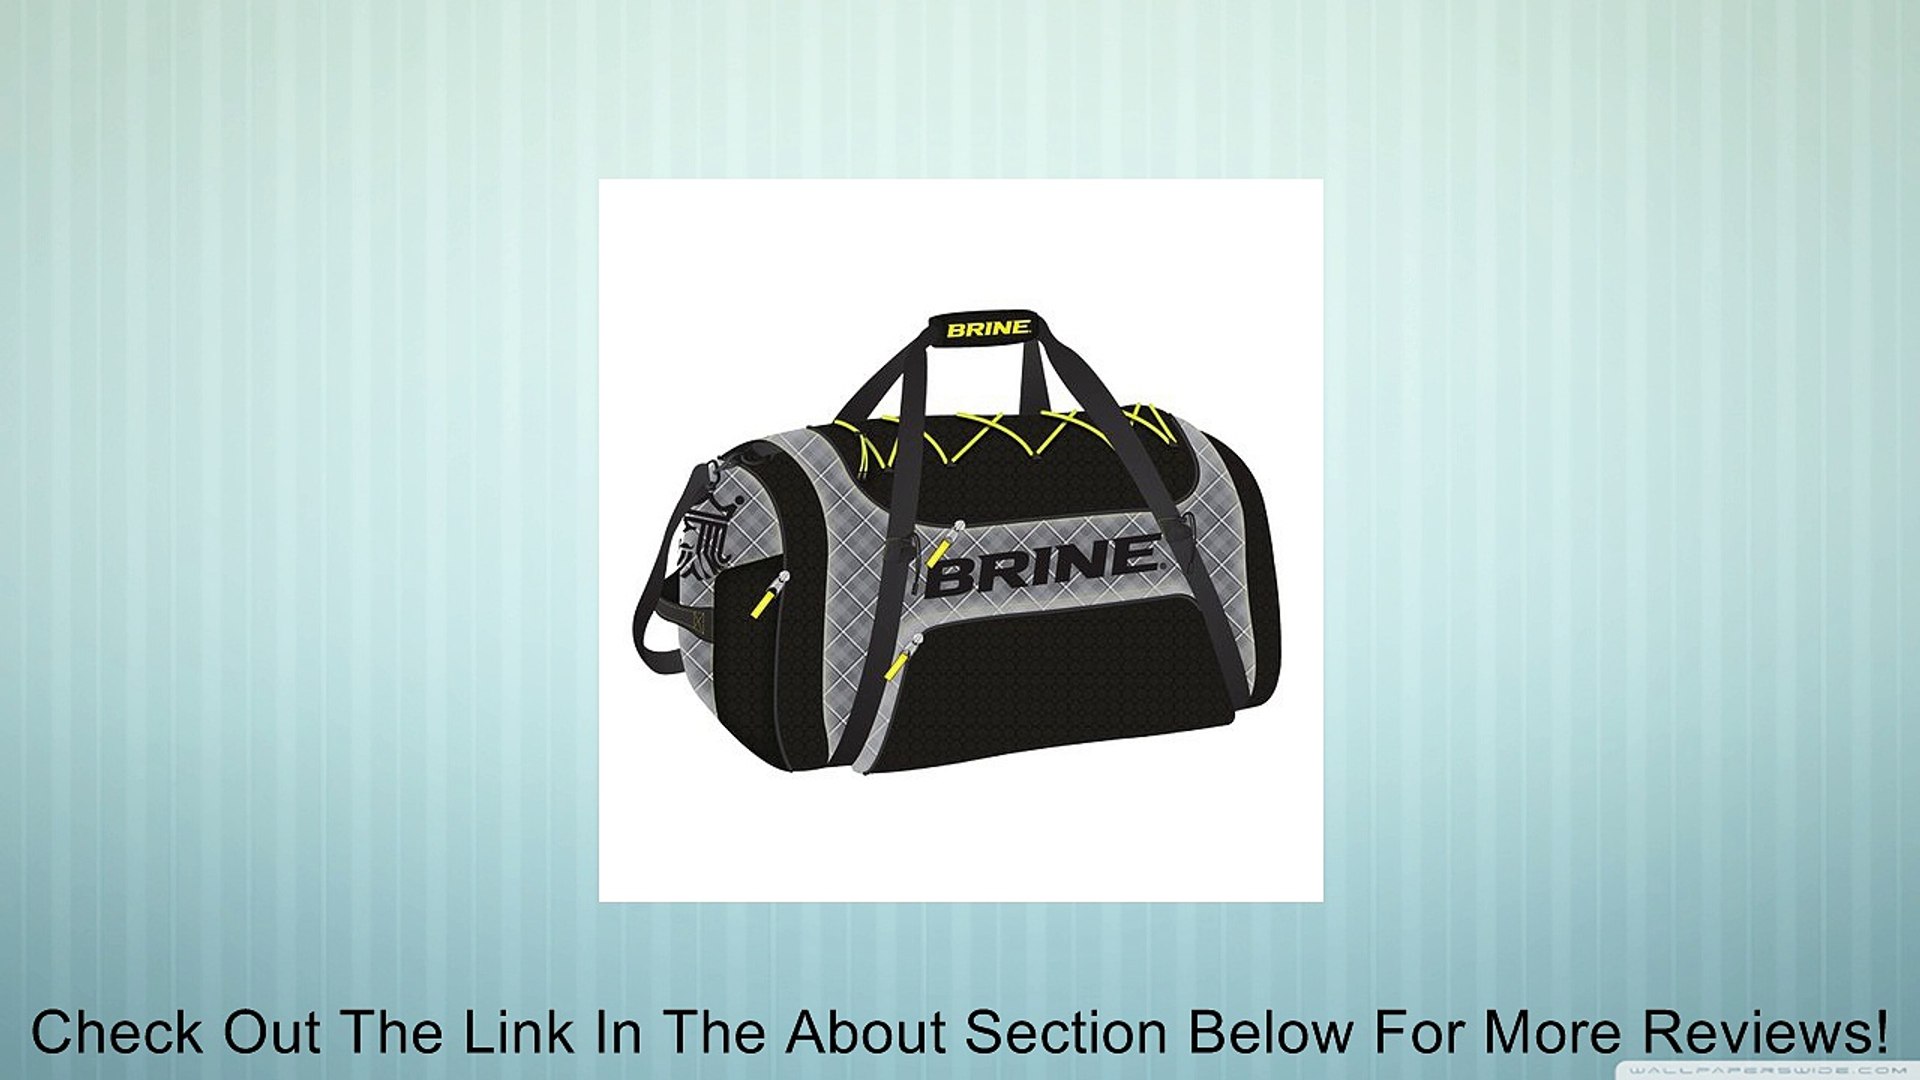 Black Brine Expedition Equipment Bag